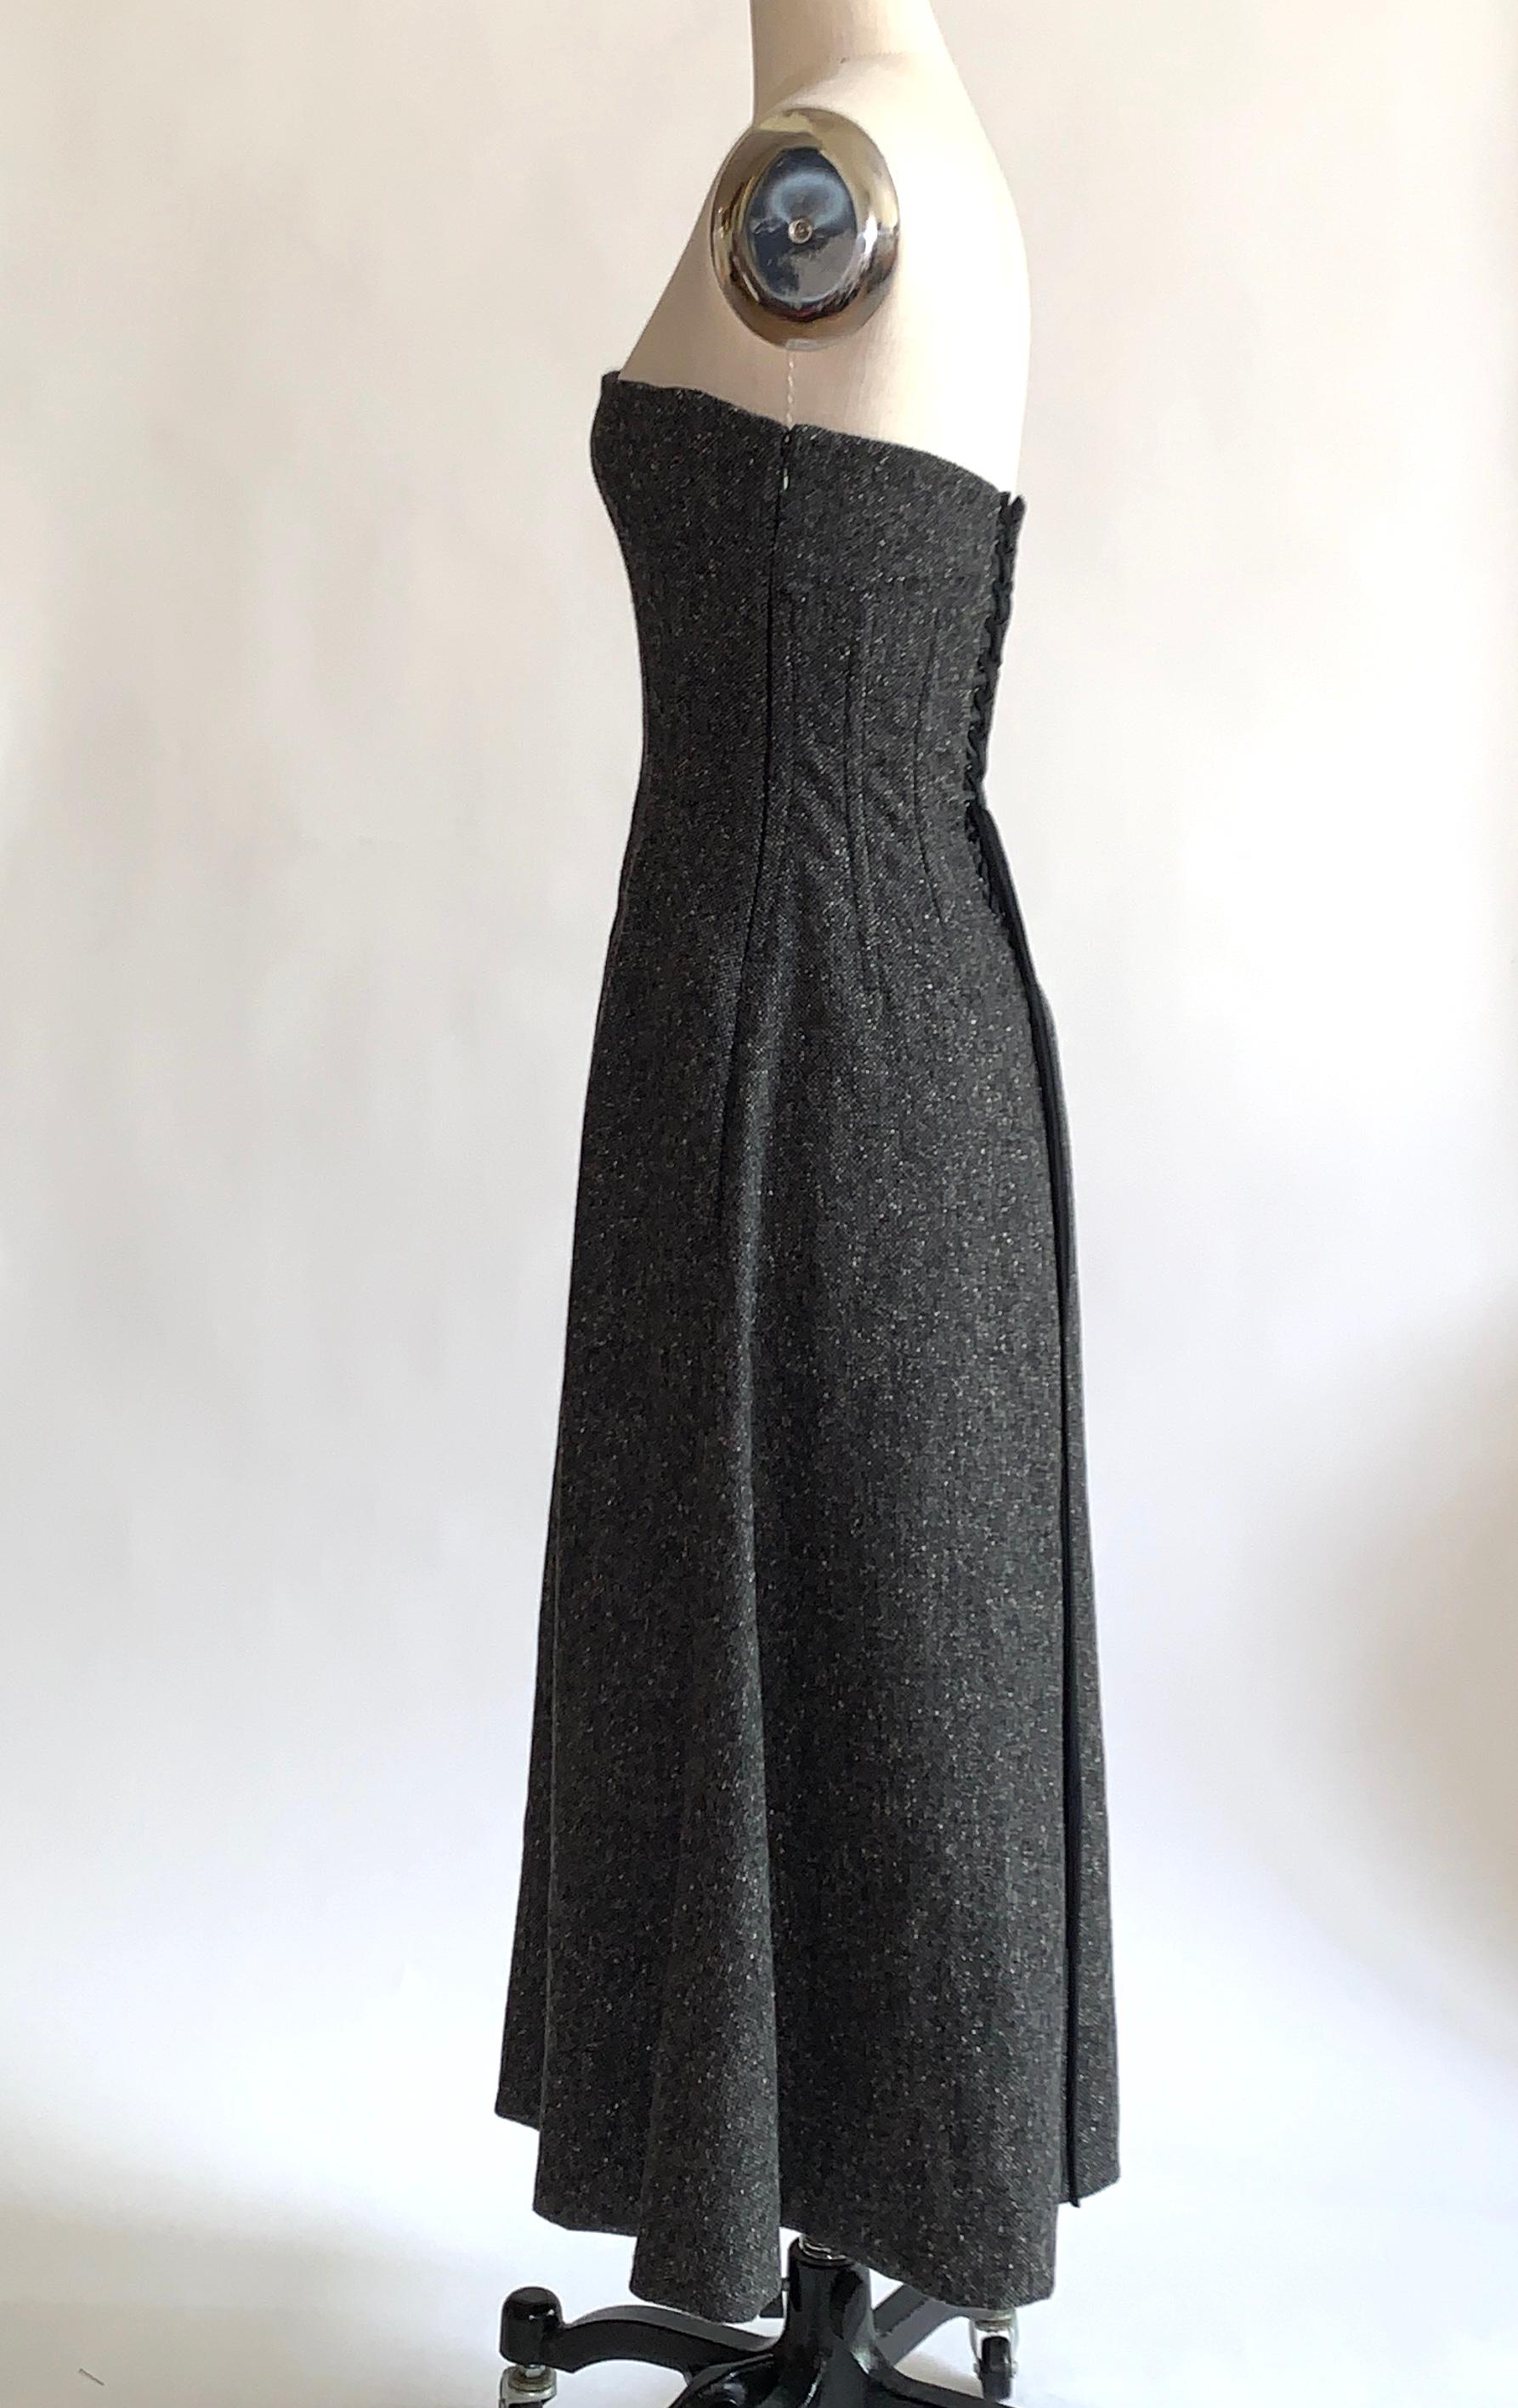 grey corset dress